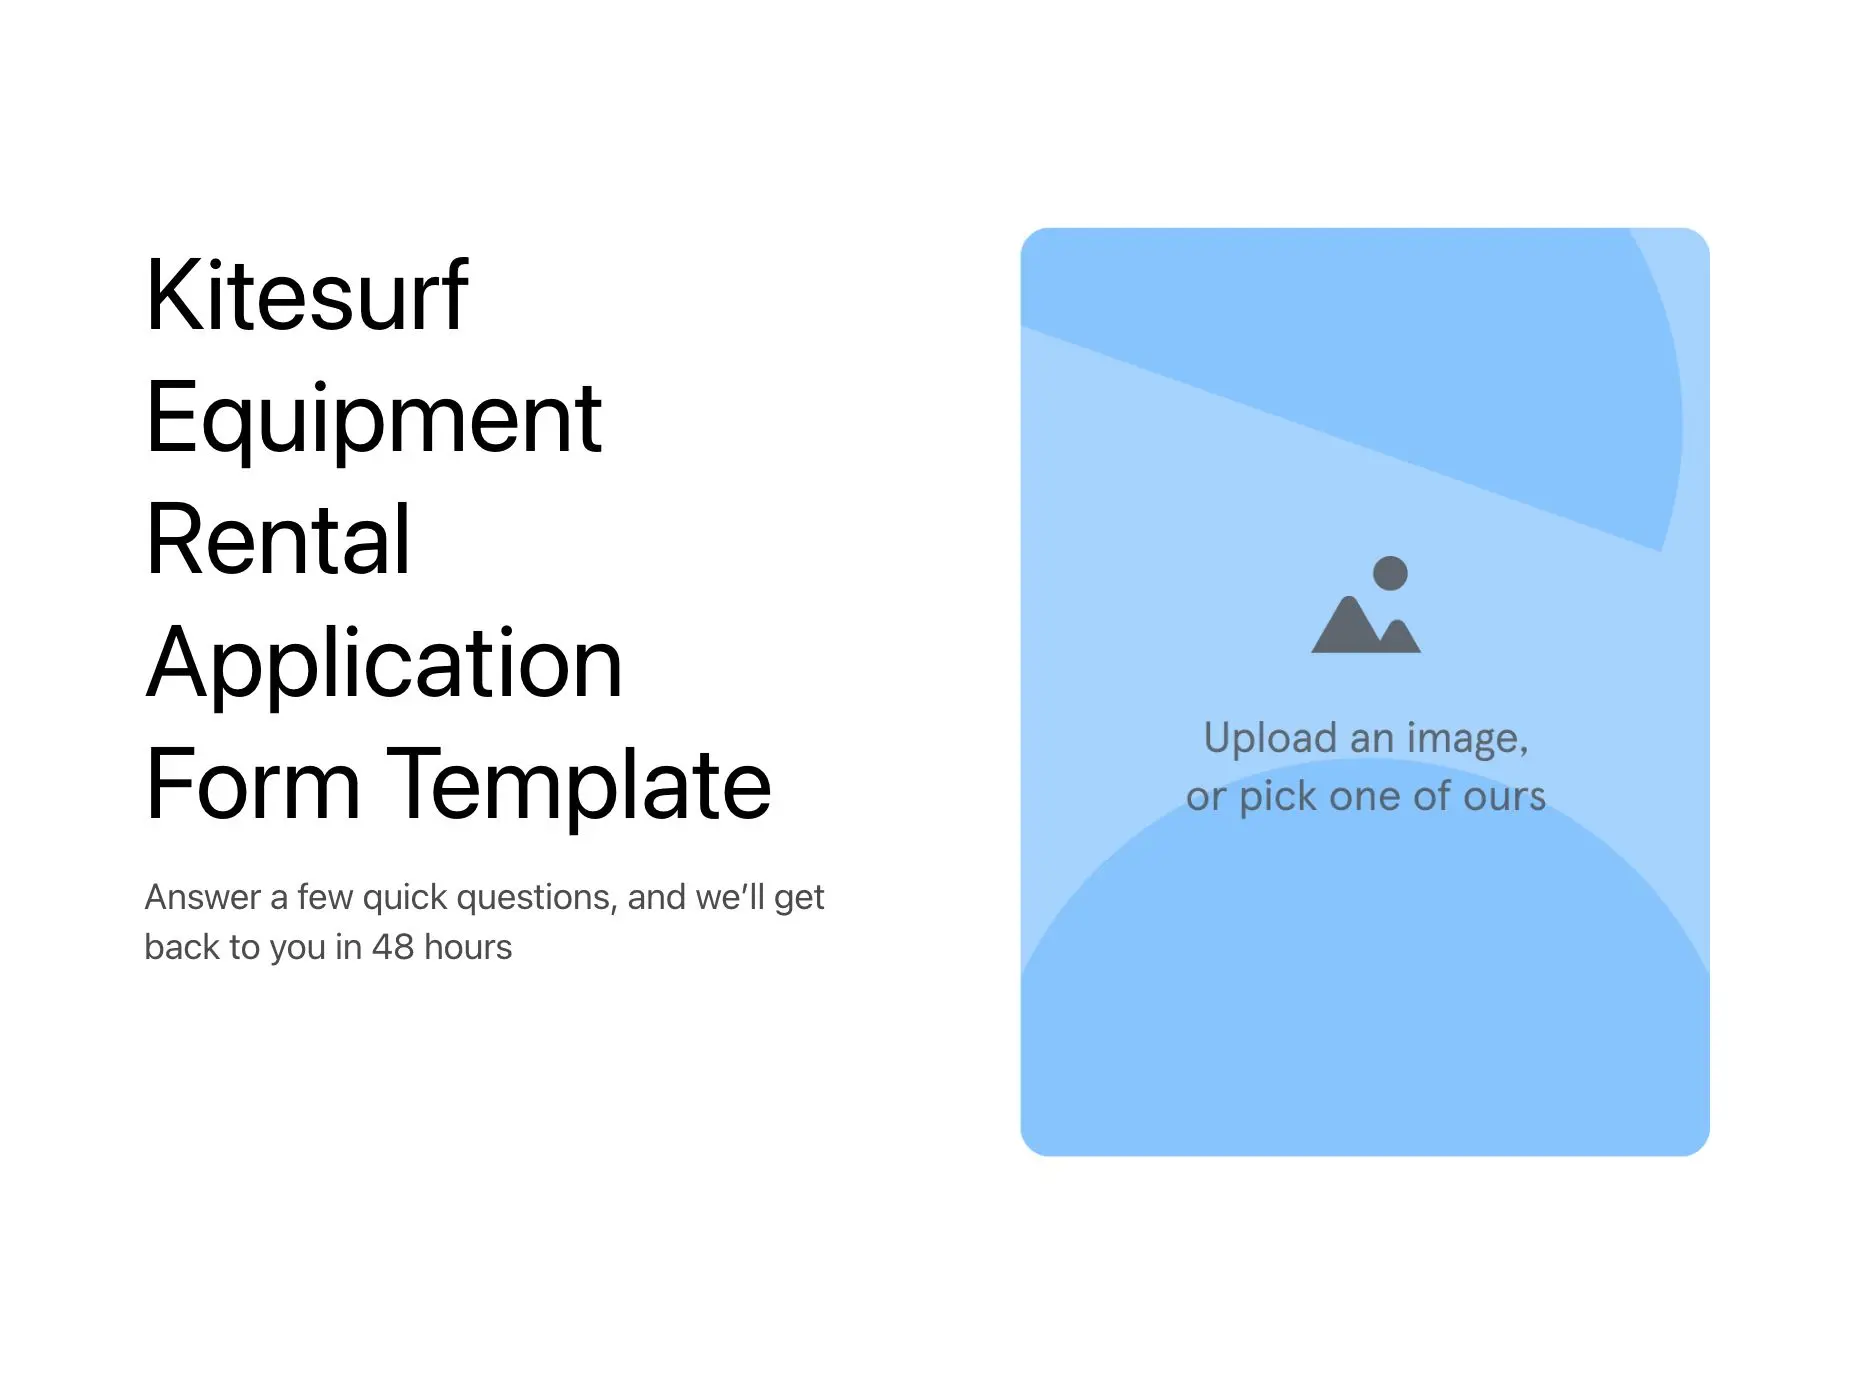 Kitesurf Equipment Rental Application Form Template Hero